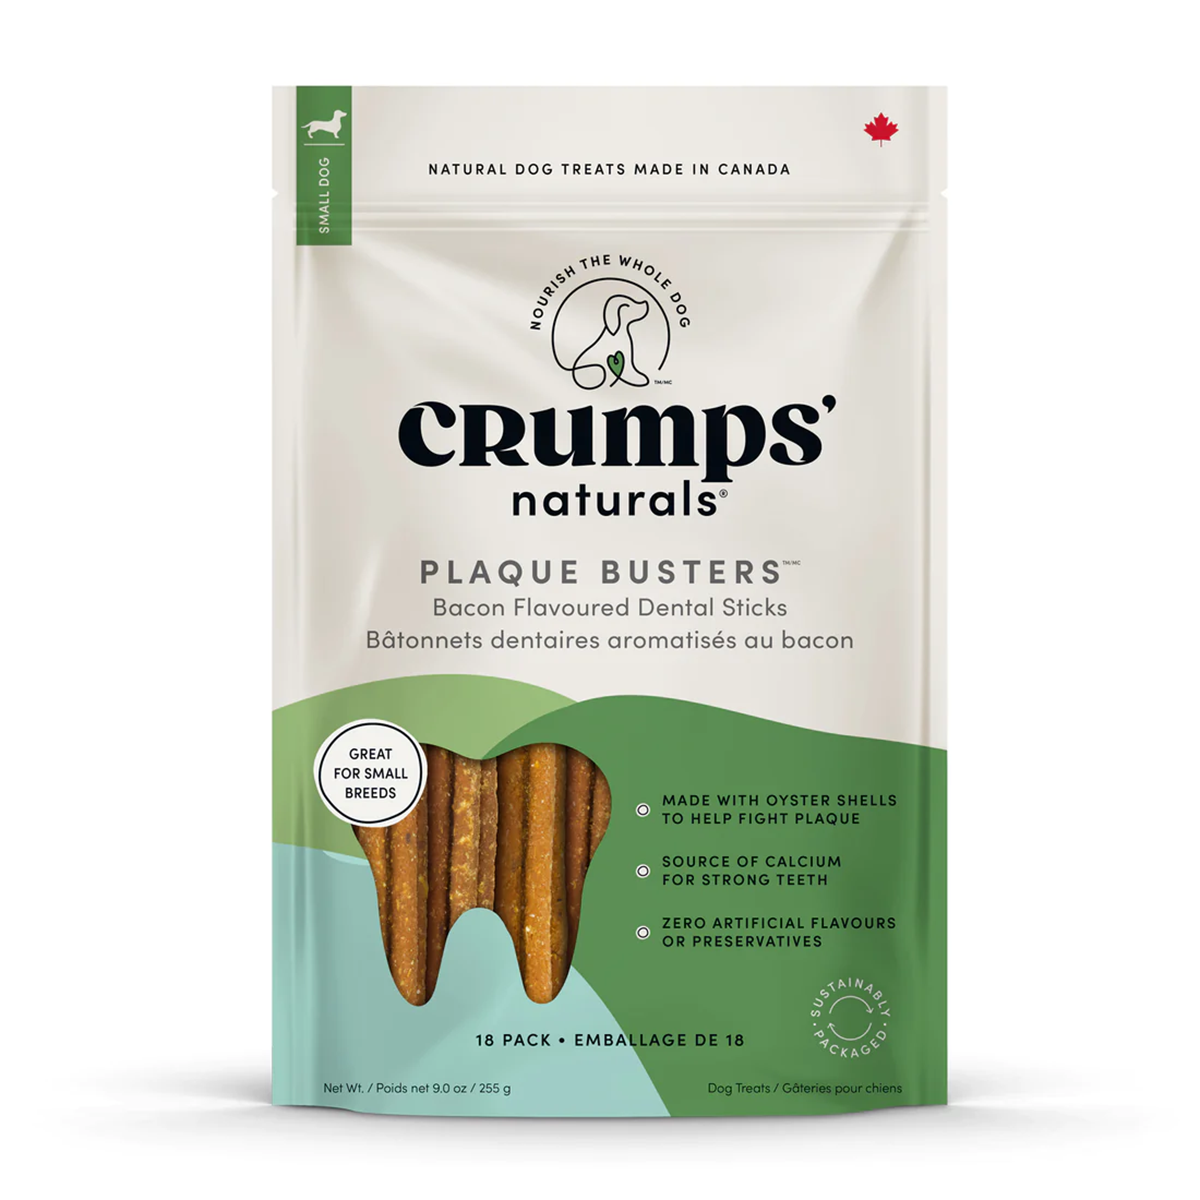 Crumps' Naturals Plaque Busters Dental Sticks Dog Treat - Bacon